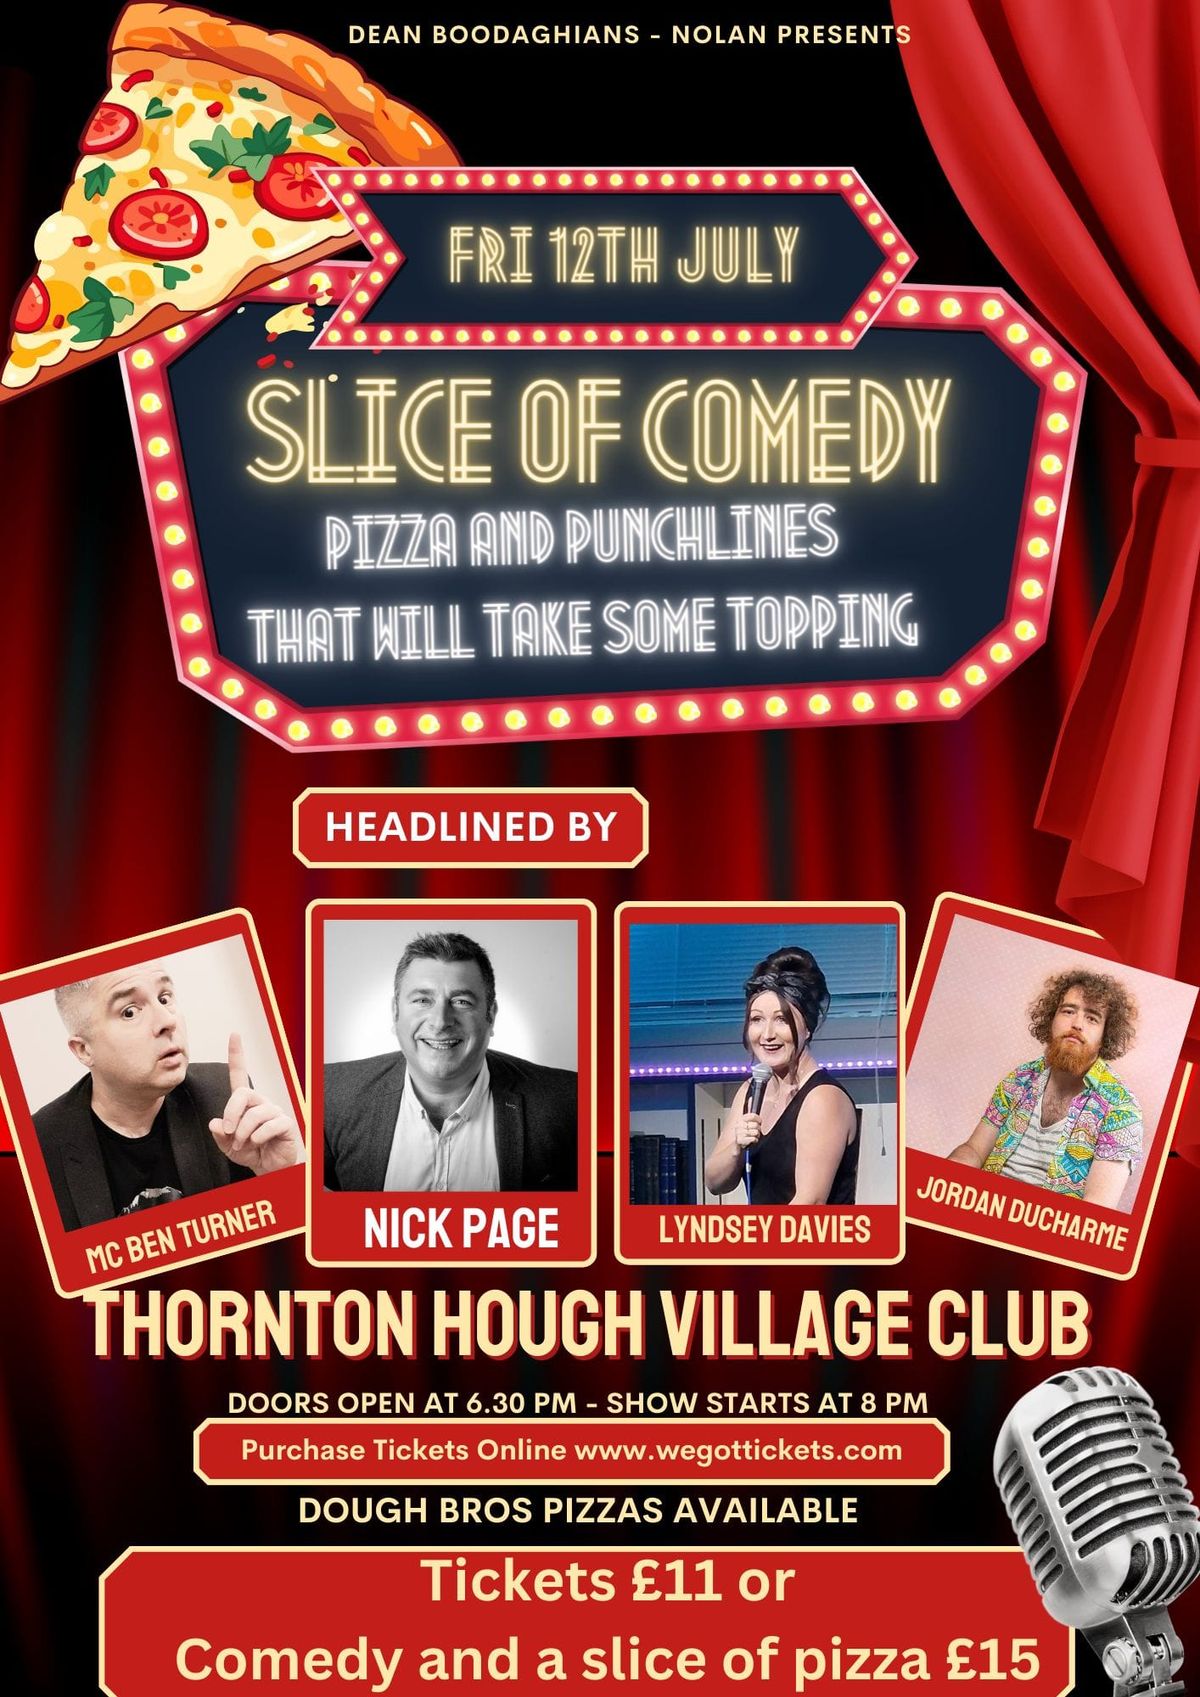 Comedy Night at Thornton Hough Village Club Friday July 12